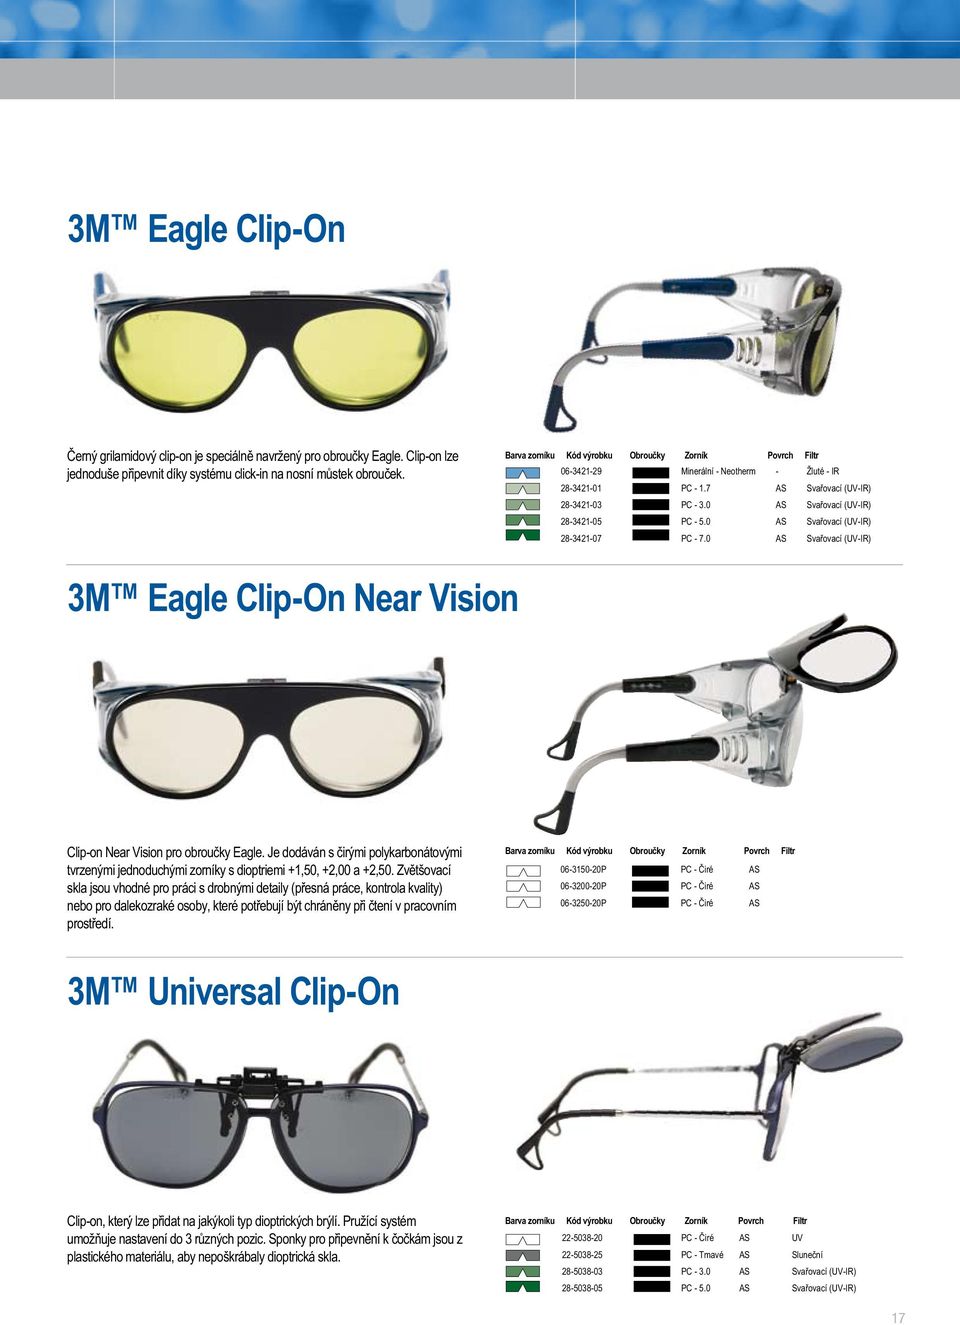 0 - Žluté - IR Svařovací (-IR) Svařovací (-IR) Svařovací (-IR) Svařovací (-IR) Clip-on Near Vision pro obroučky Eagle.